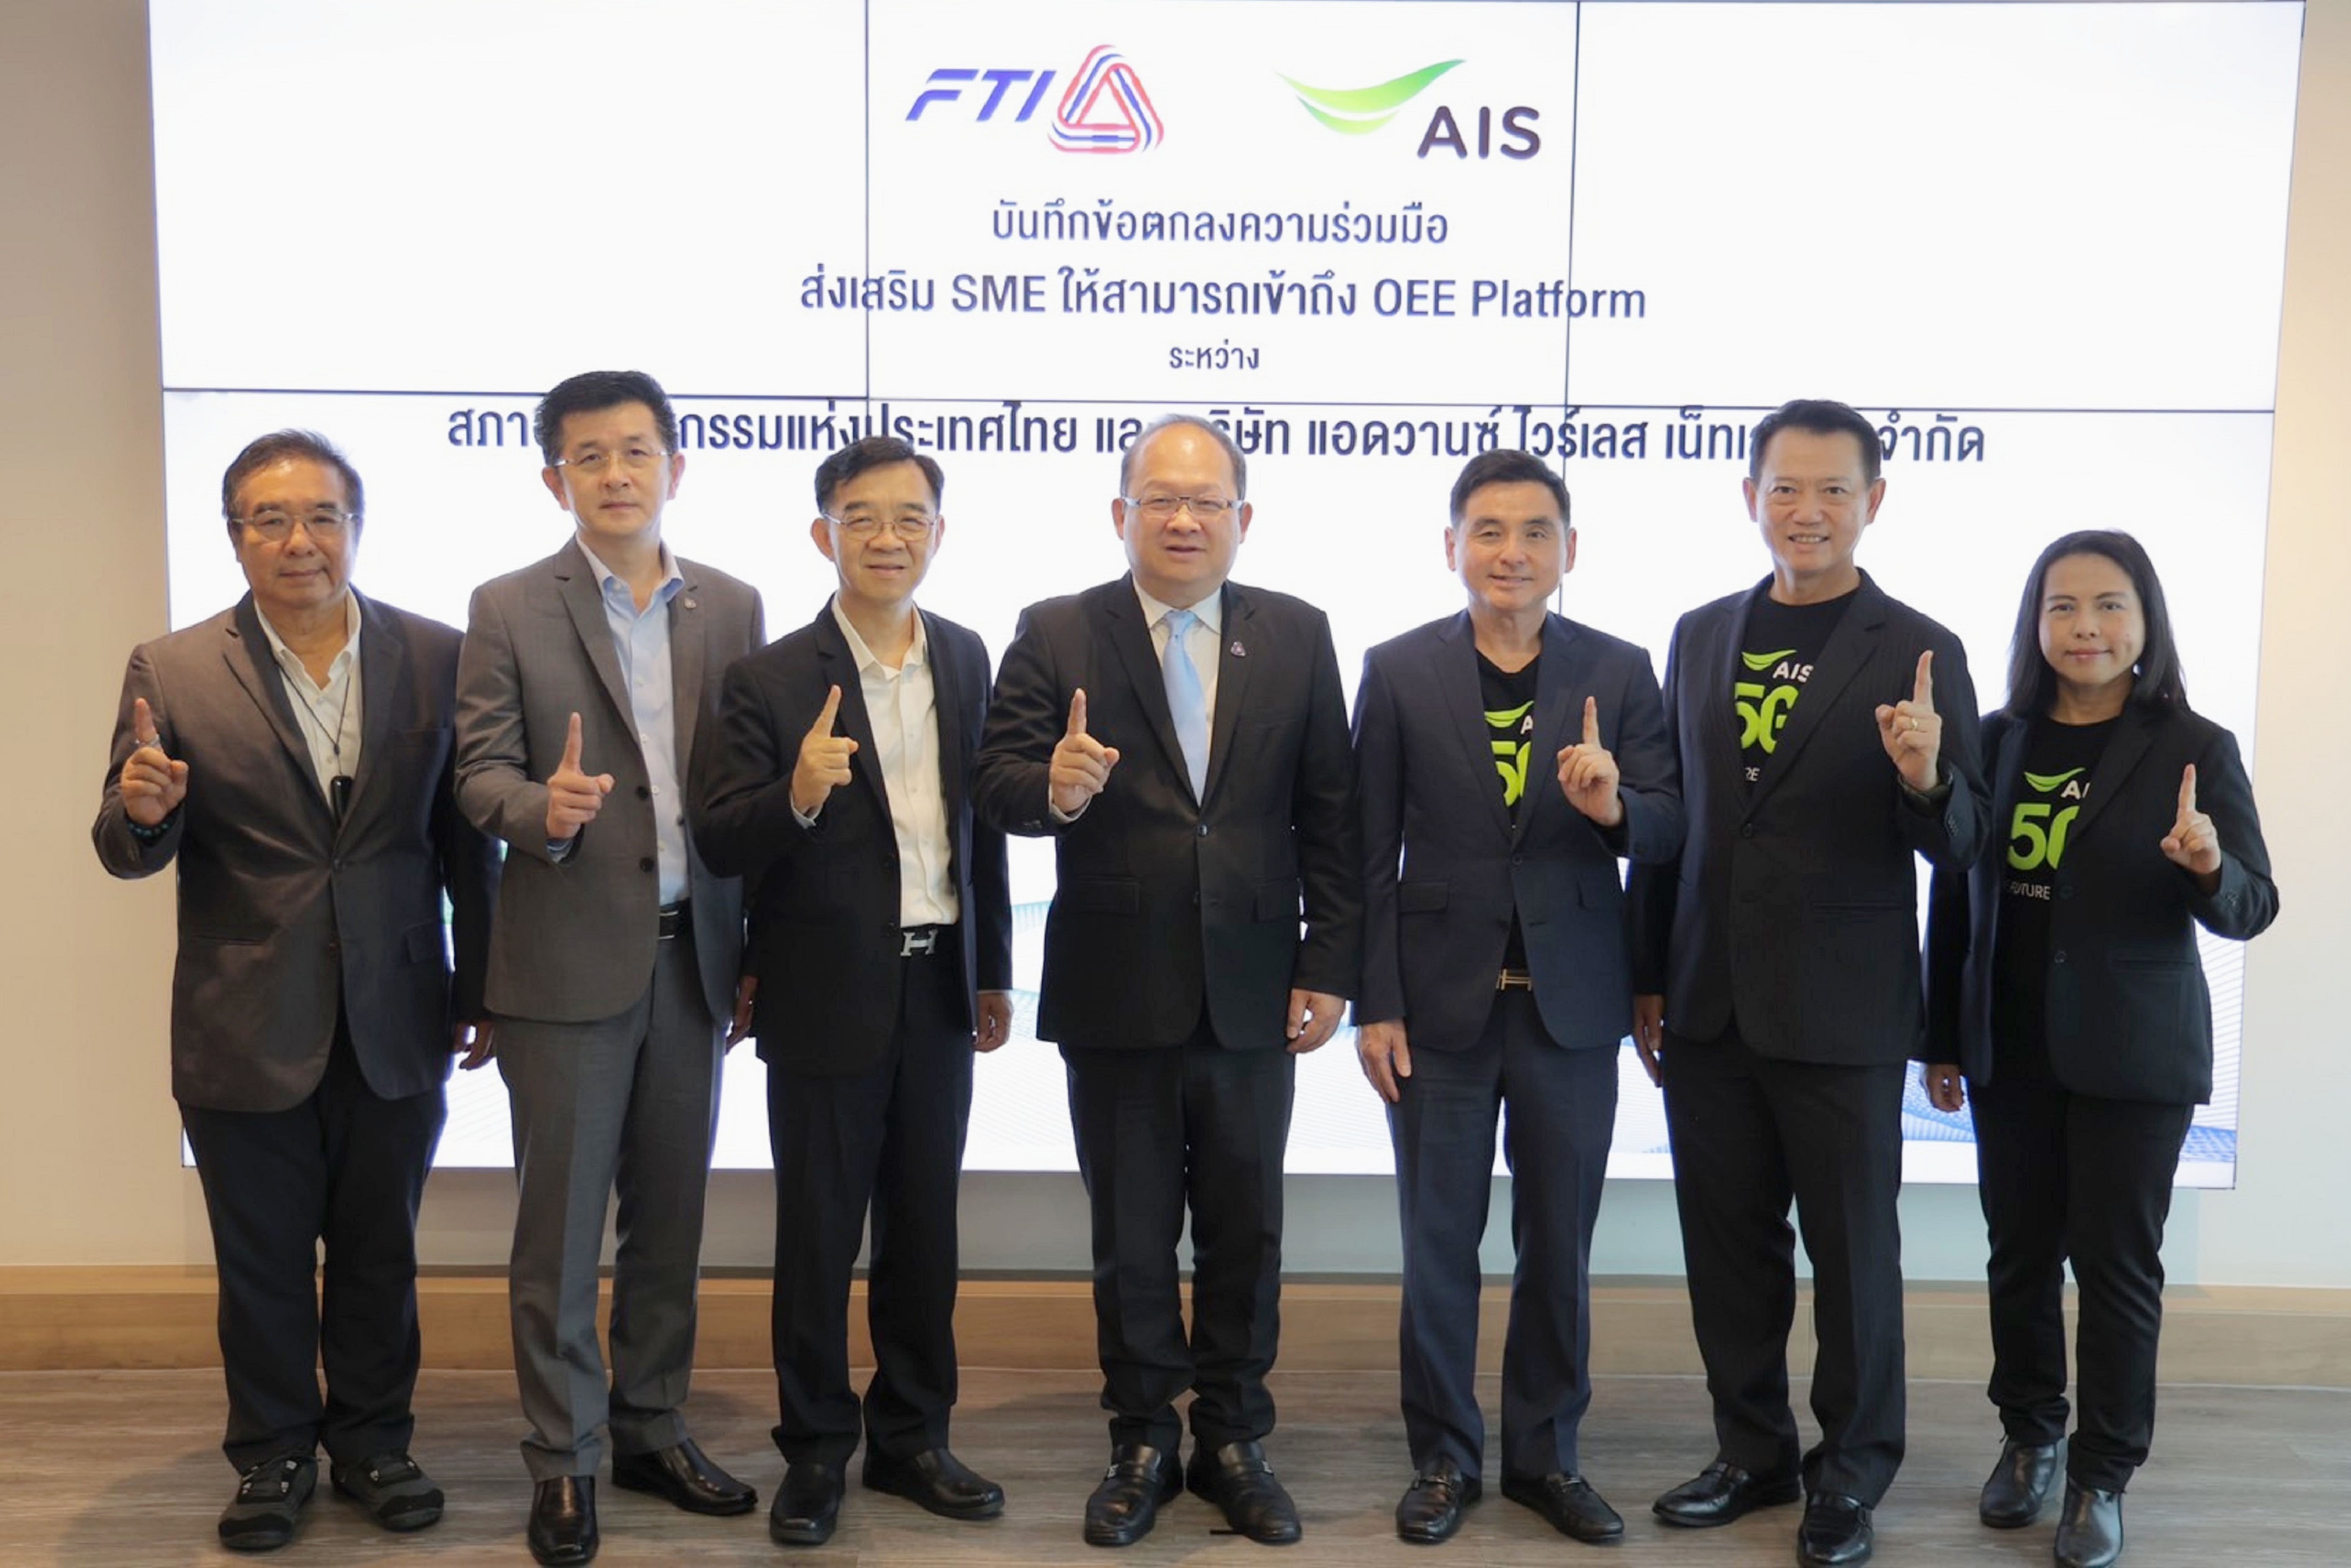 AIS จับมือ สภาอุตสาหกรรมแห่งประเทศไทย ยกระดับภาคอุตฯ การผลิตไทย ด้วย 'AIS 5G Manufacturing Platform' หนุนผู้ประกอบการทำดิจิทัลทรานส์ฟอร์มเมชั่น One Stop